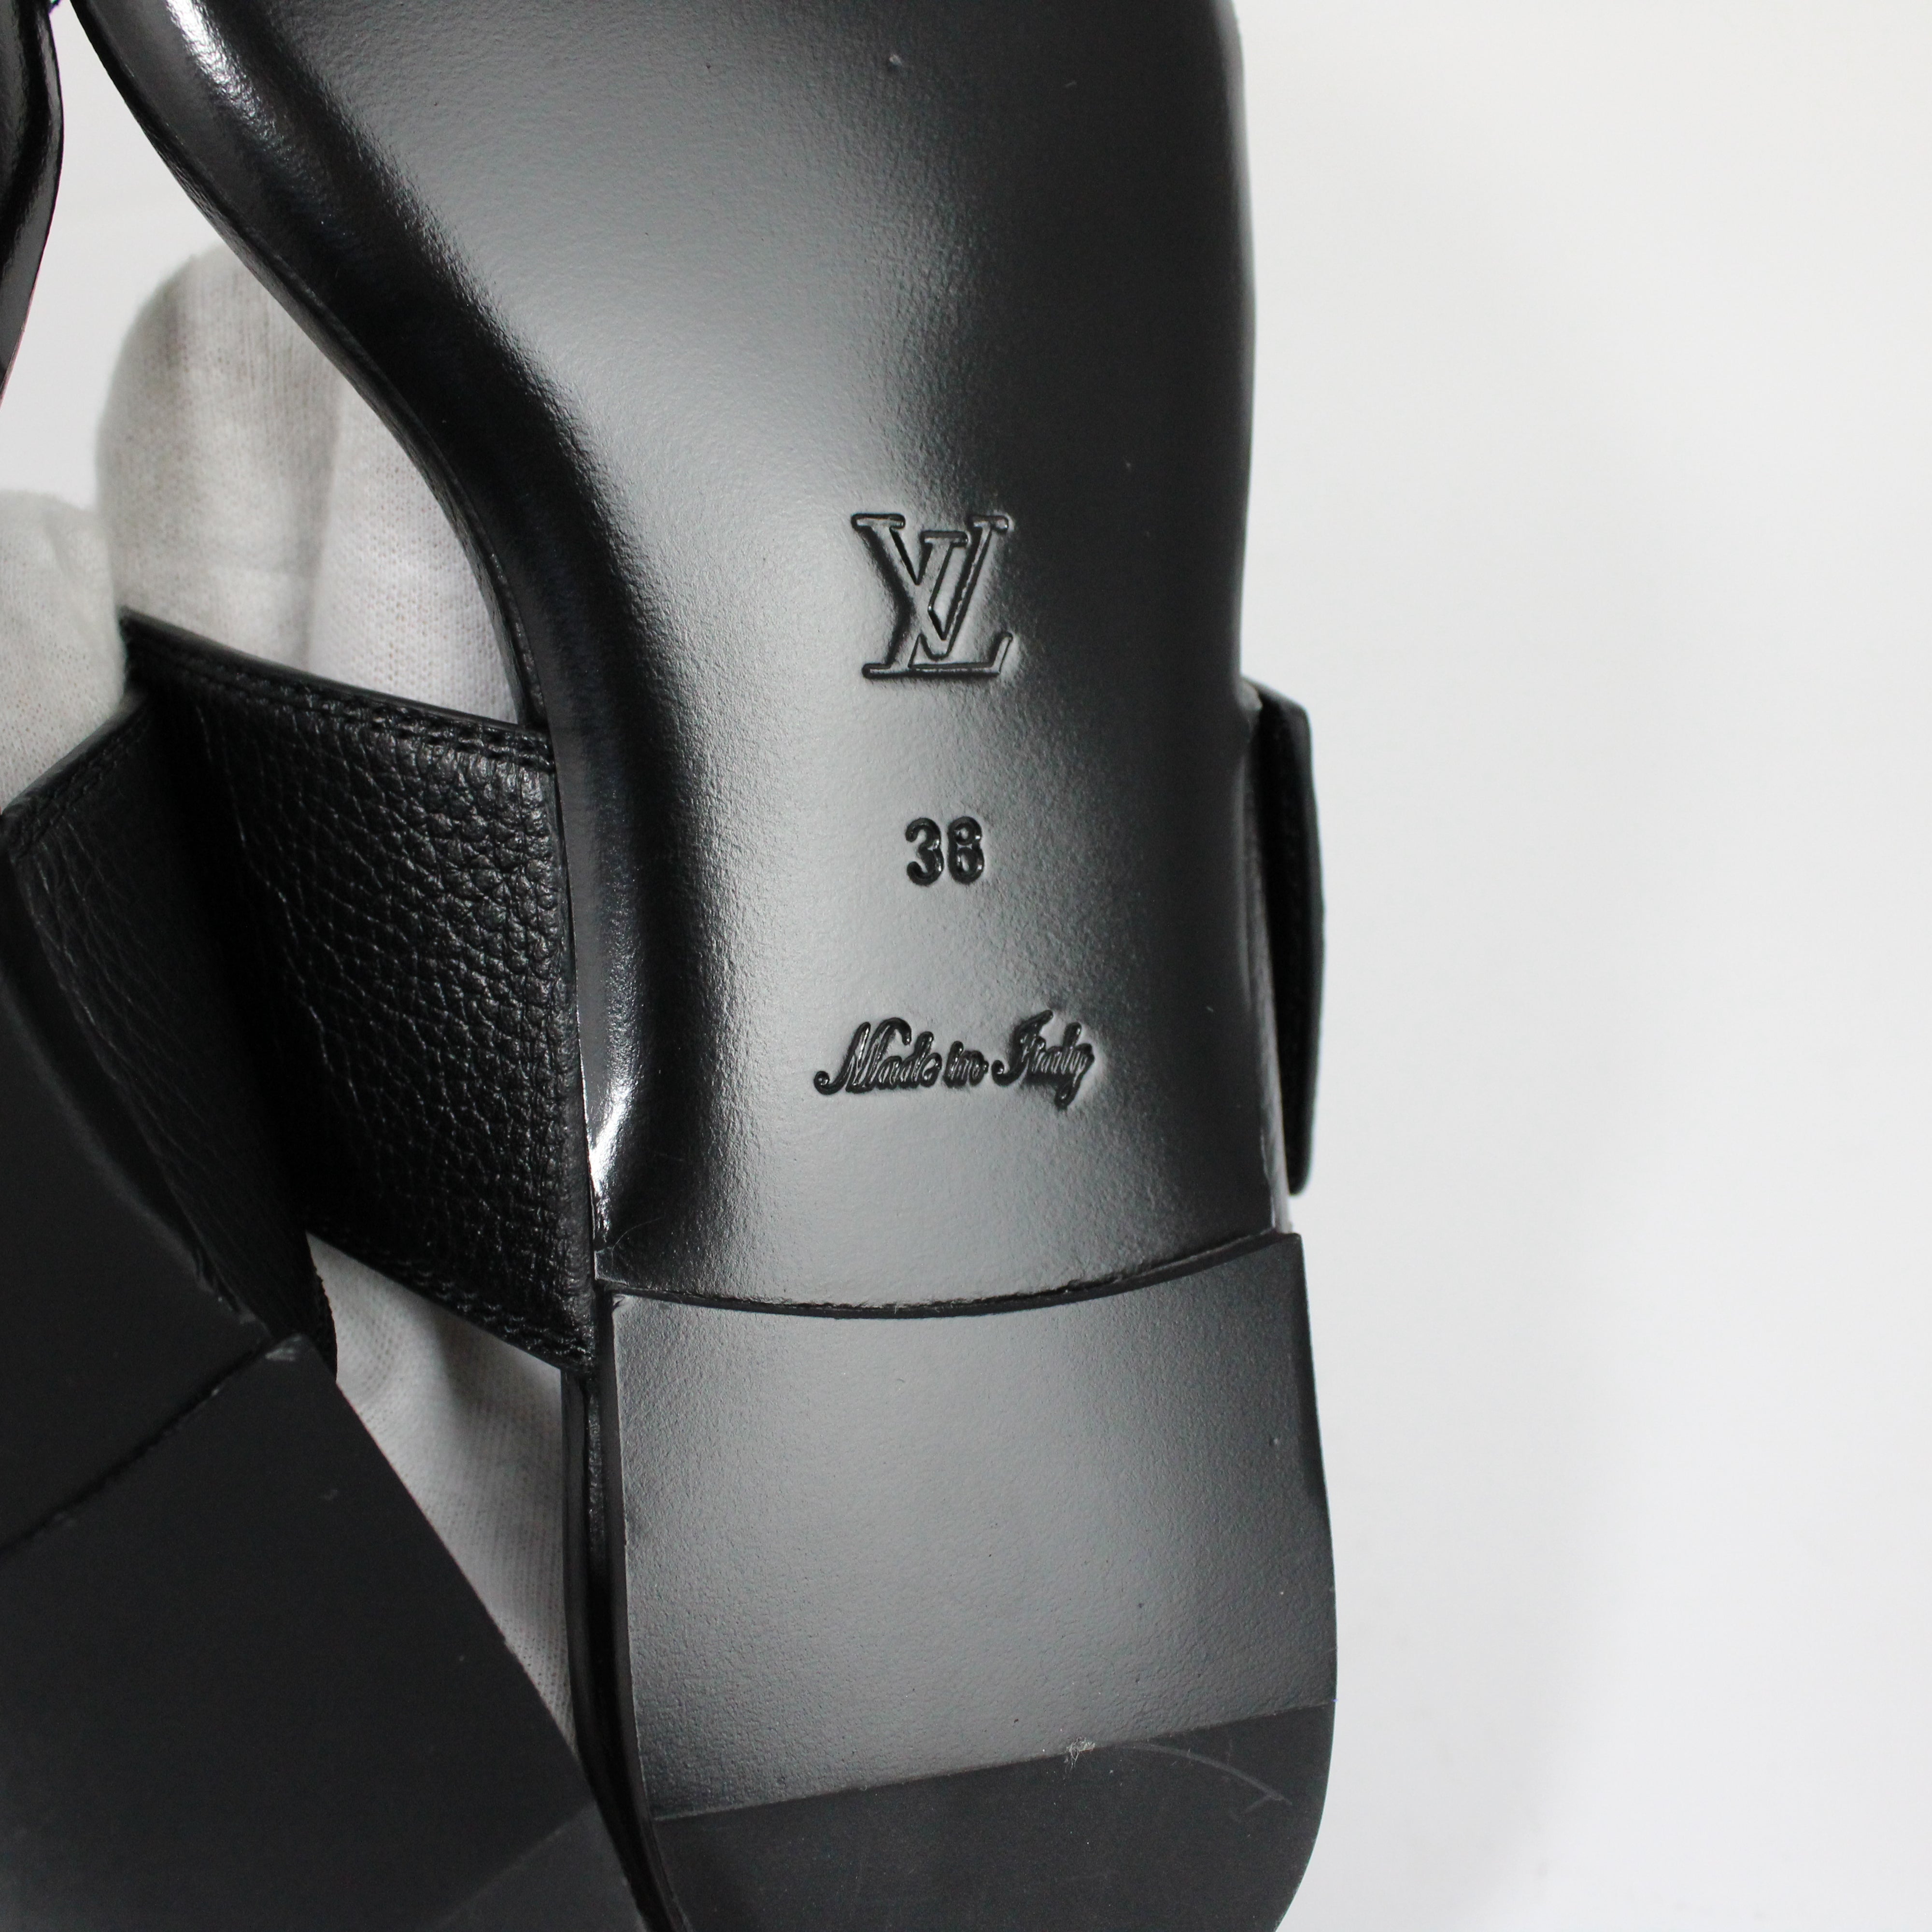 Louis Vuitton Sandalo Taglia 38